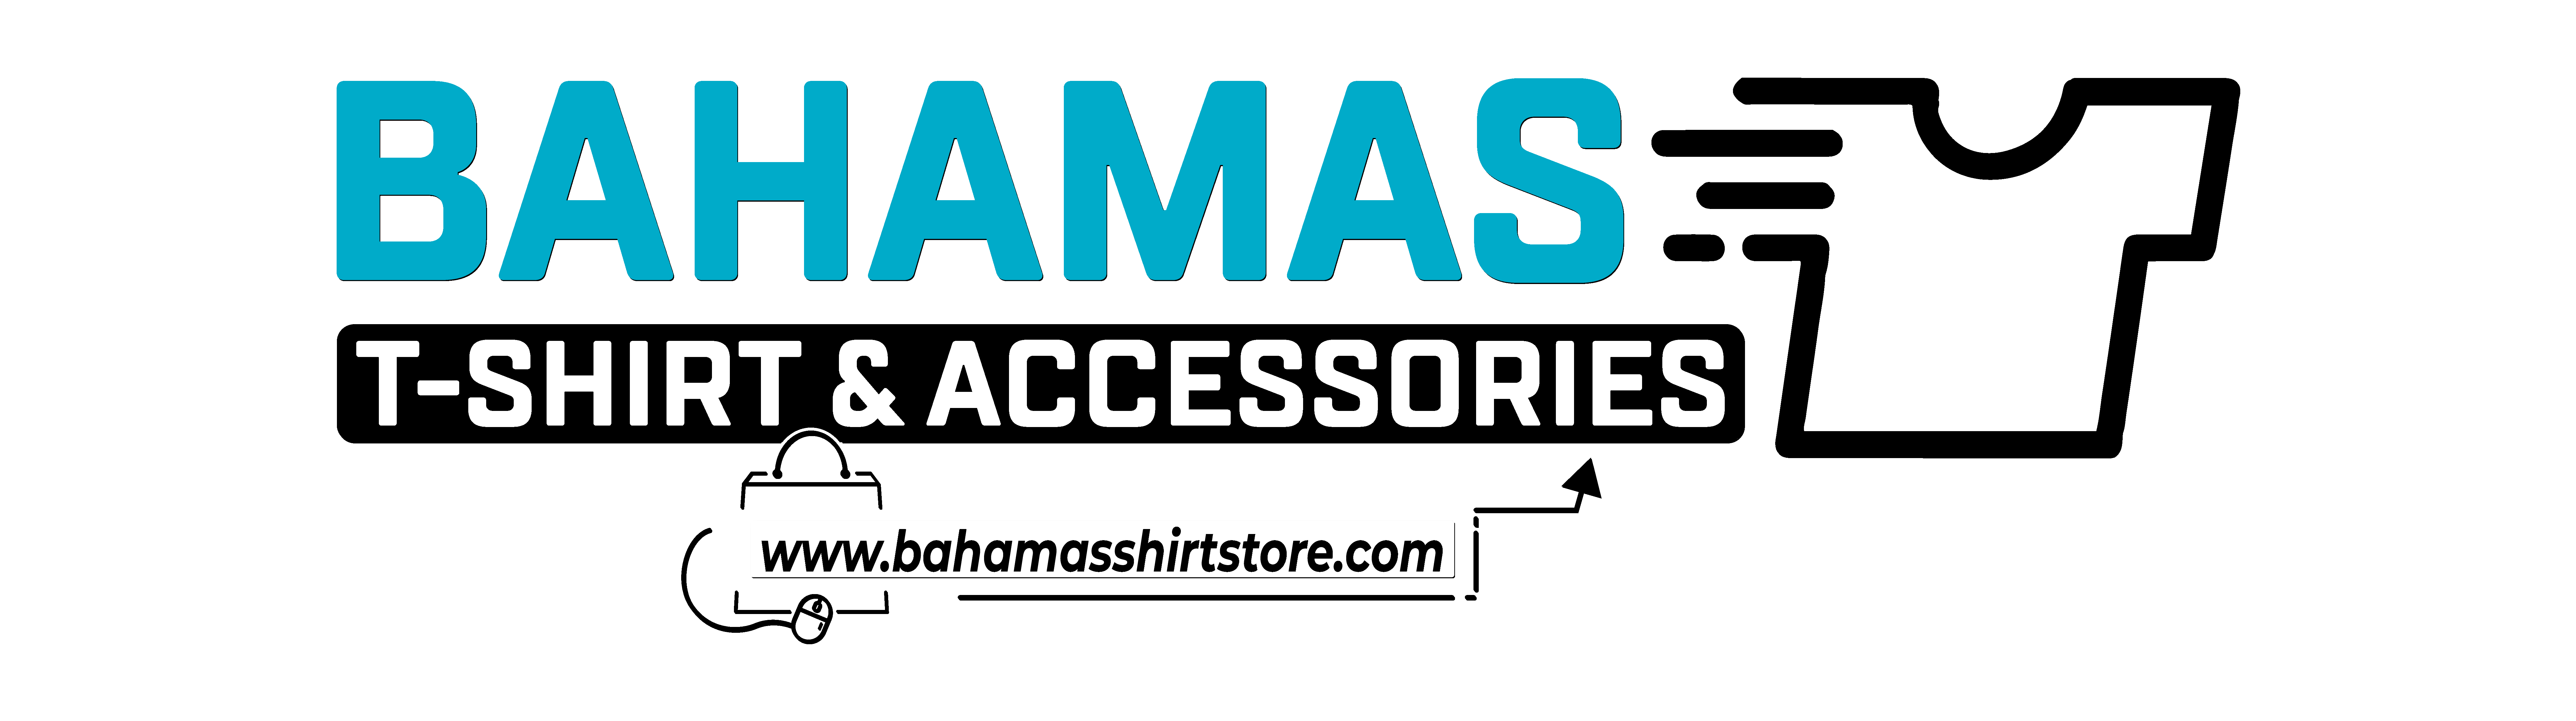 bahamas shirt store logo